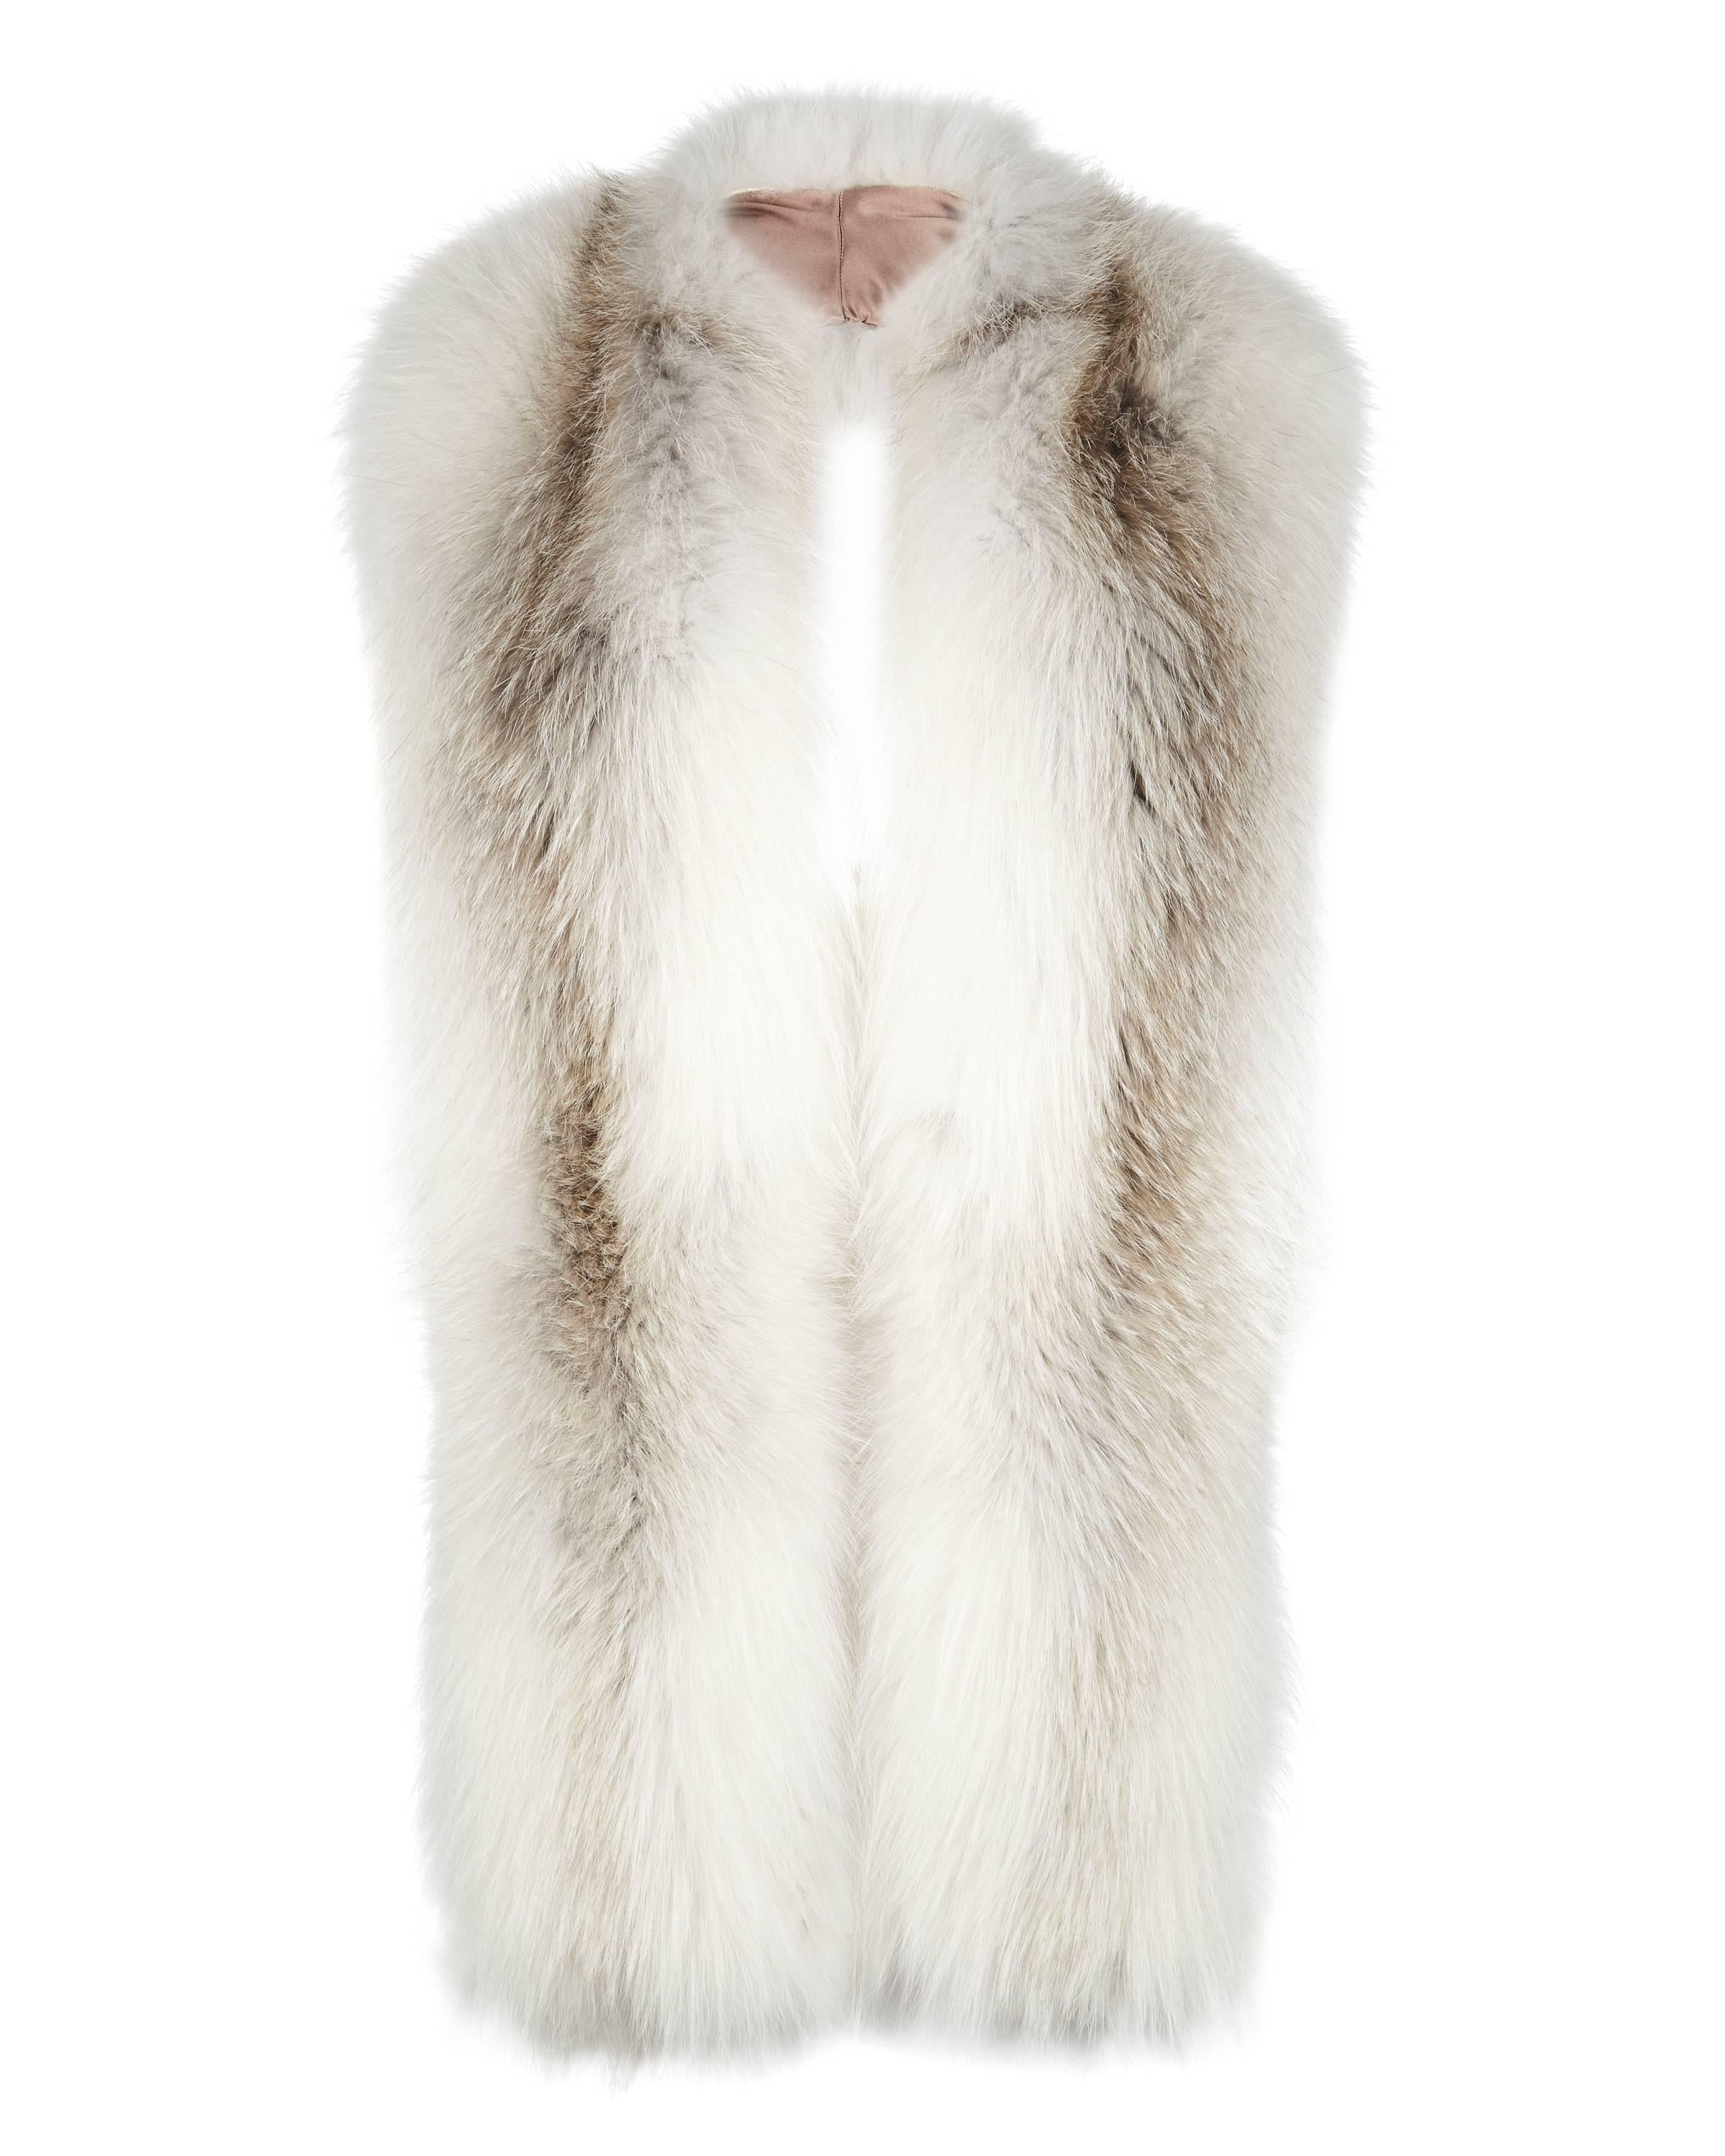 Verheyen London Legacy Stole in Natural Fawn Light Fox Fur 5